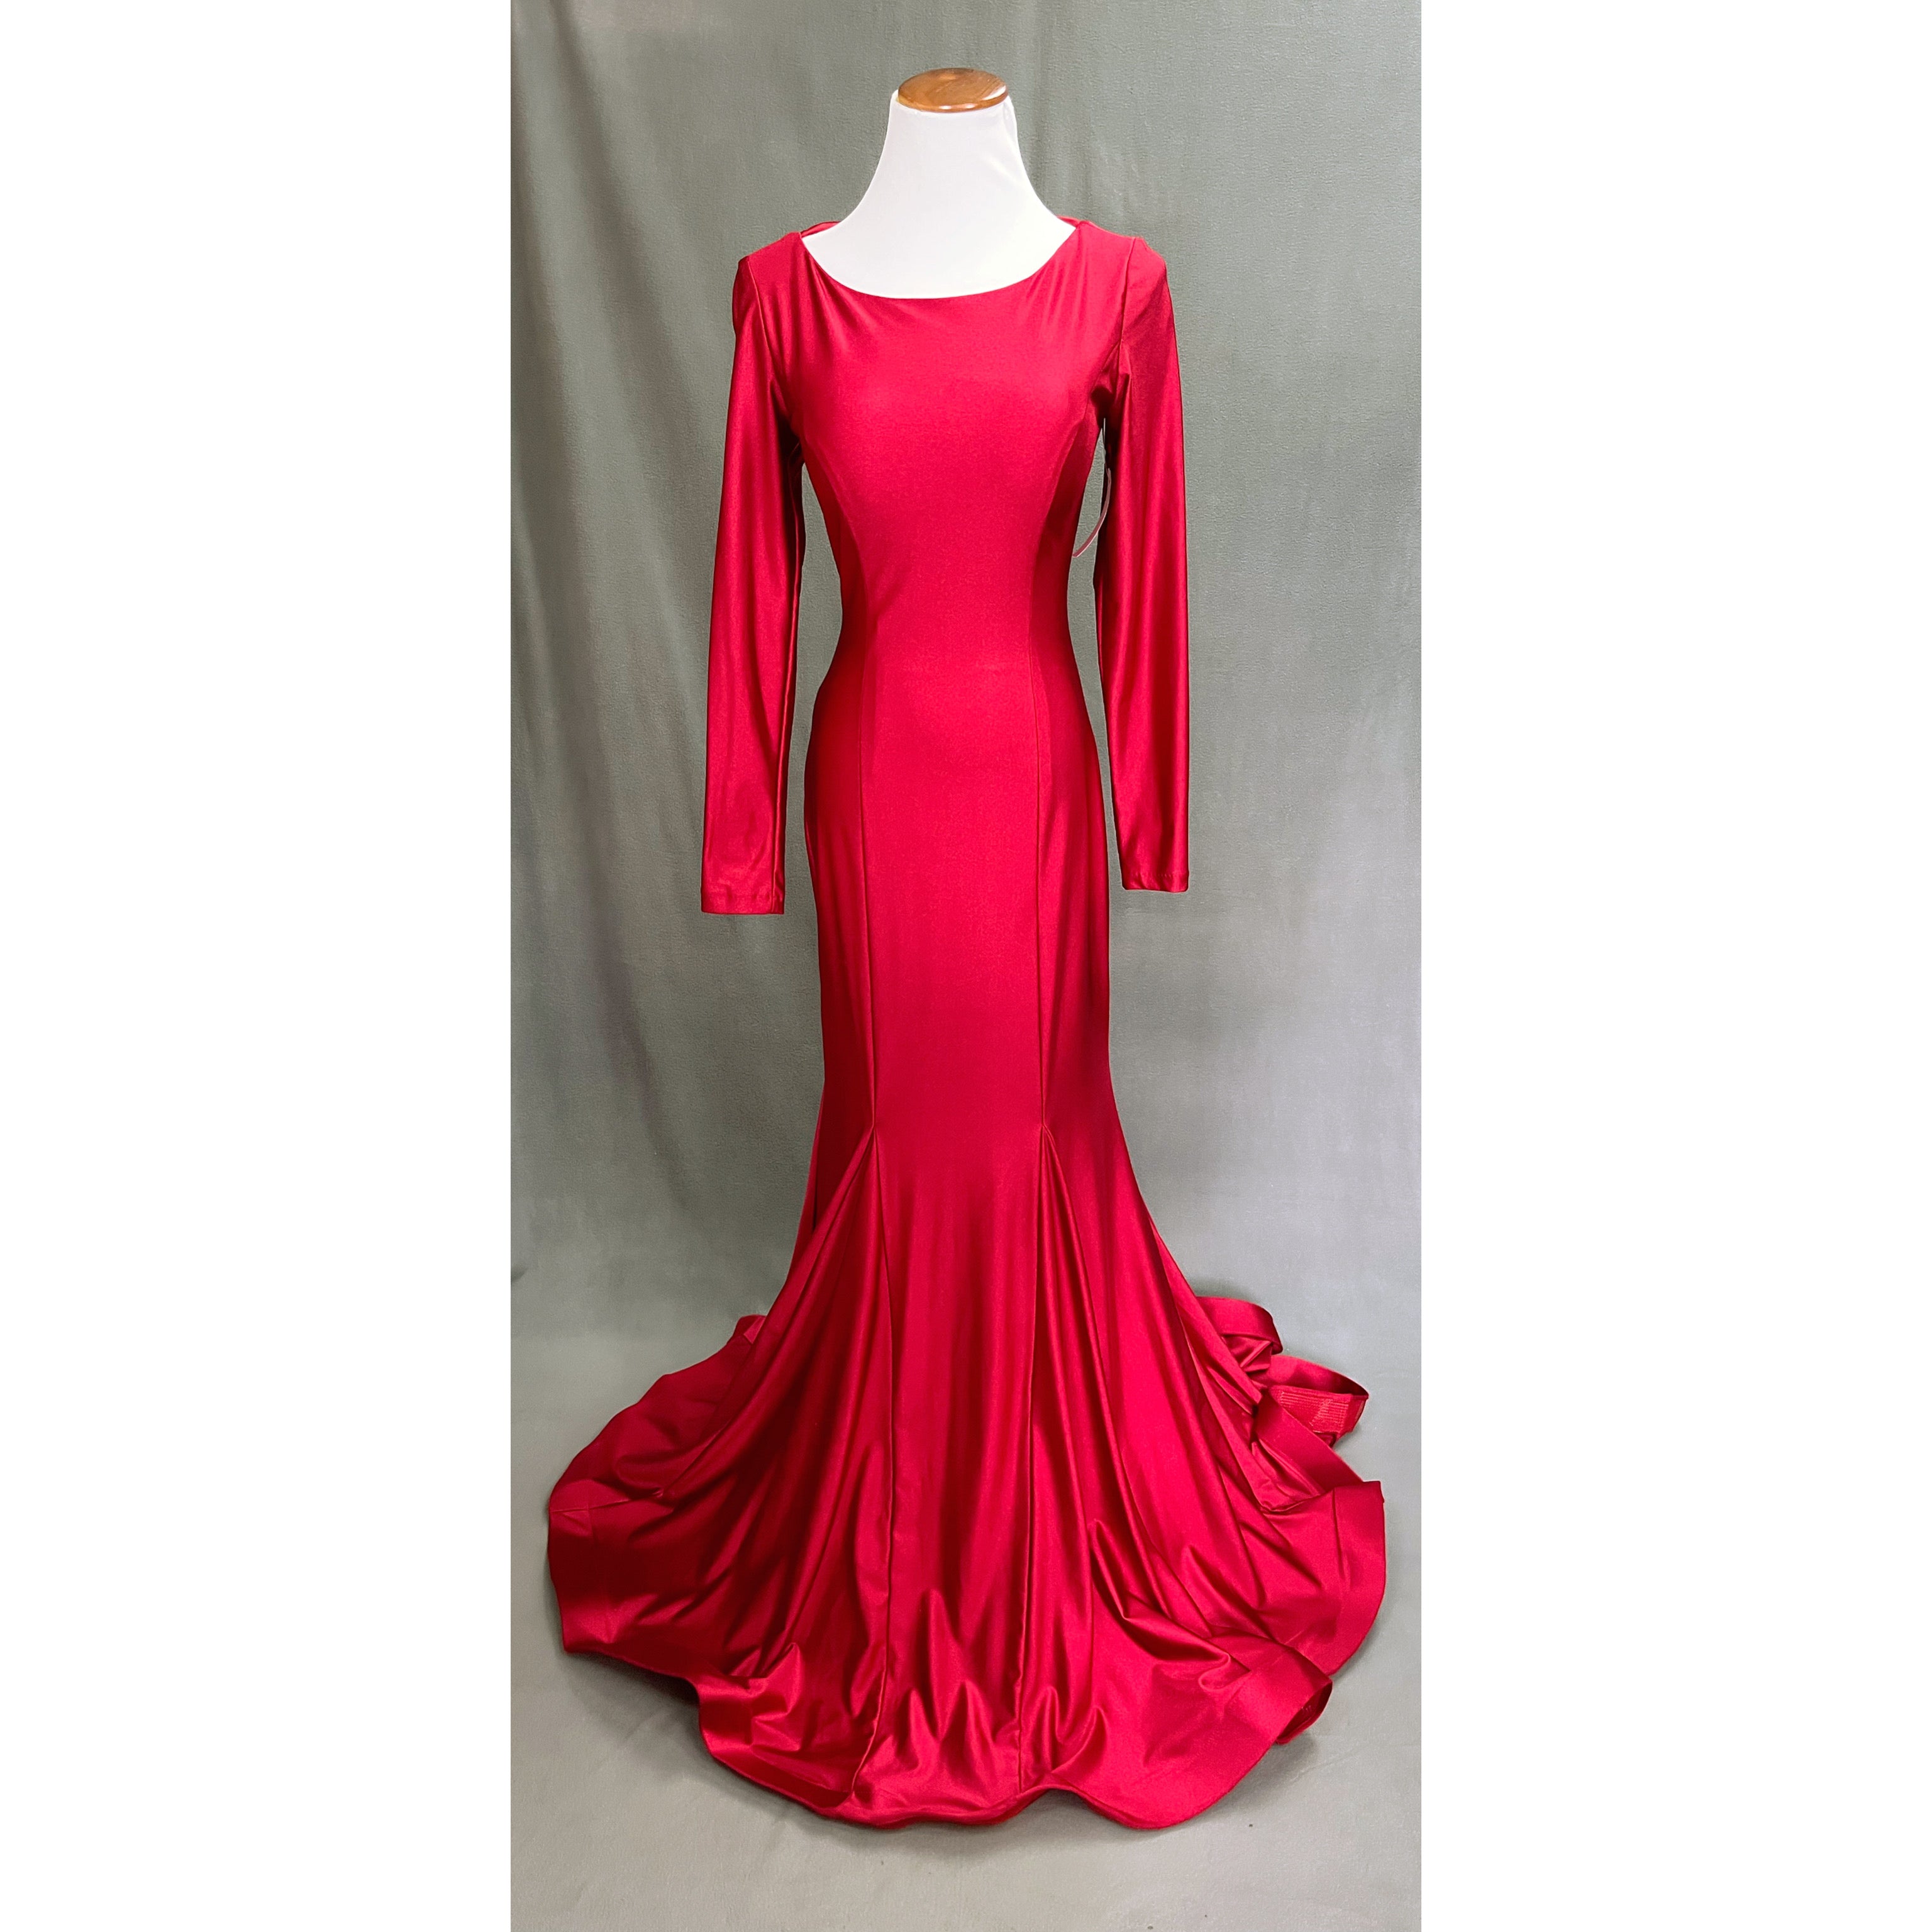 Blondie Nites red dress, size 5